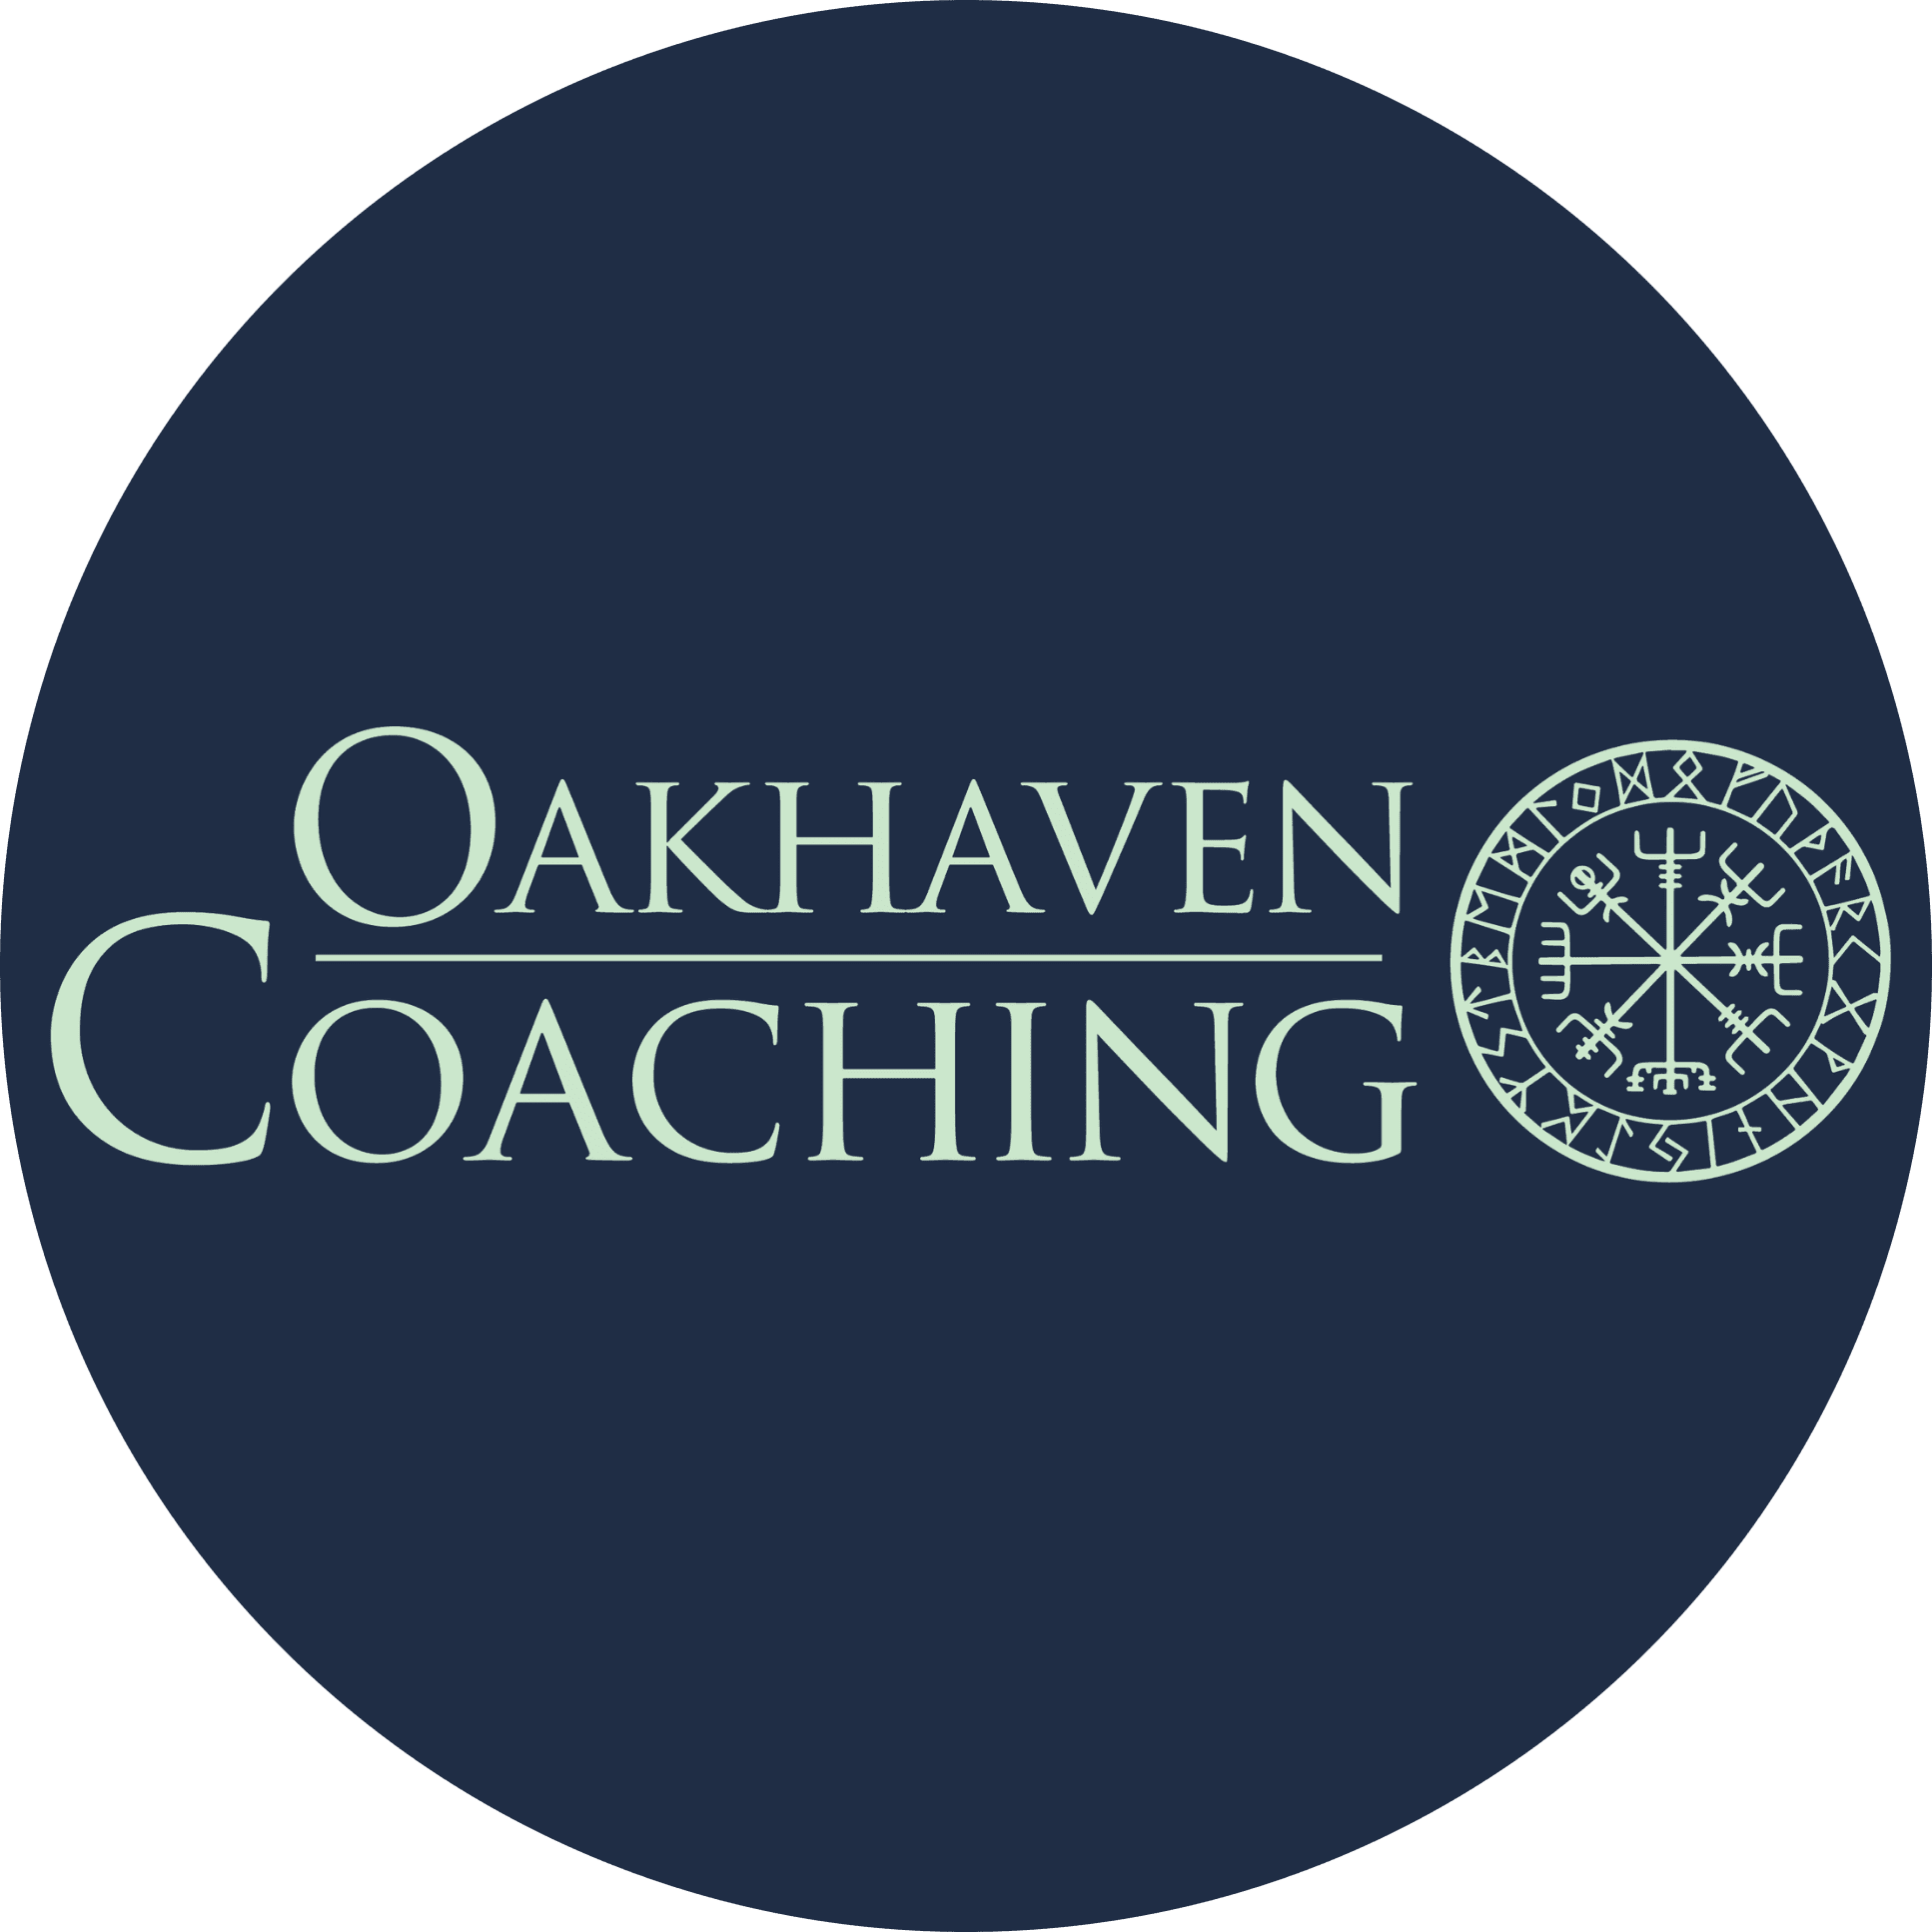 Oakhaven Coaching